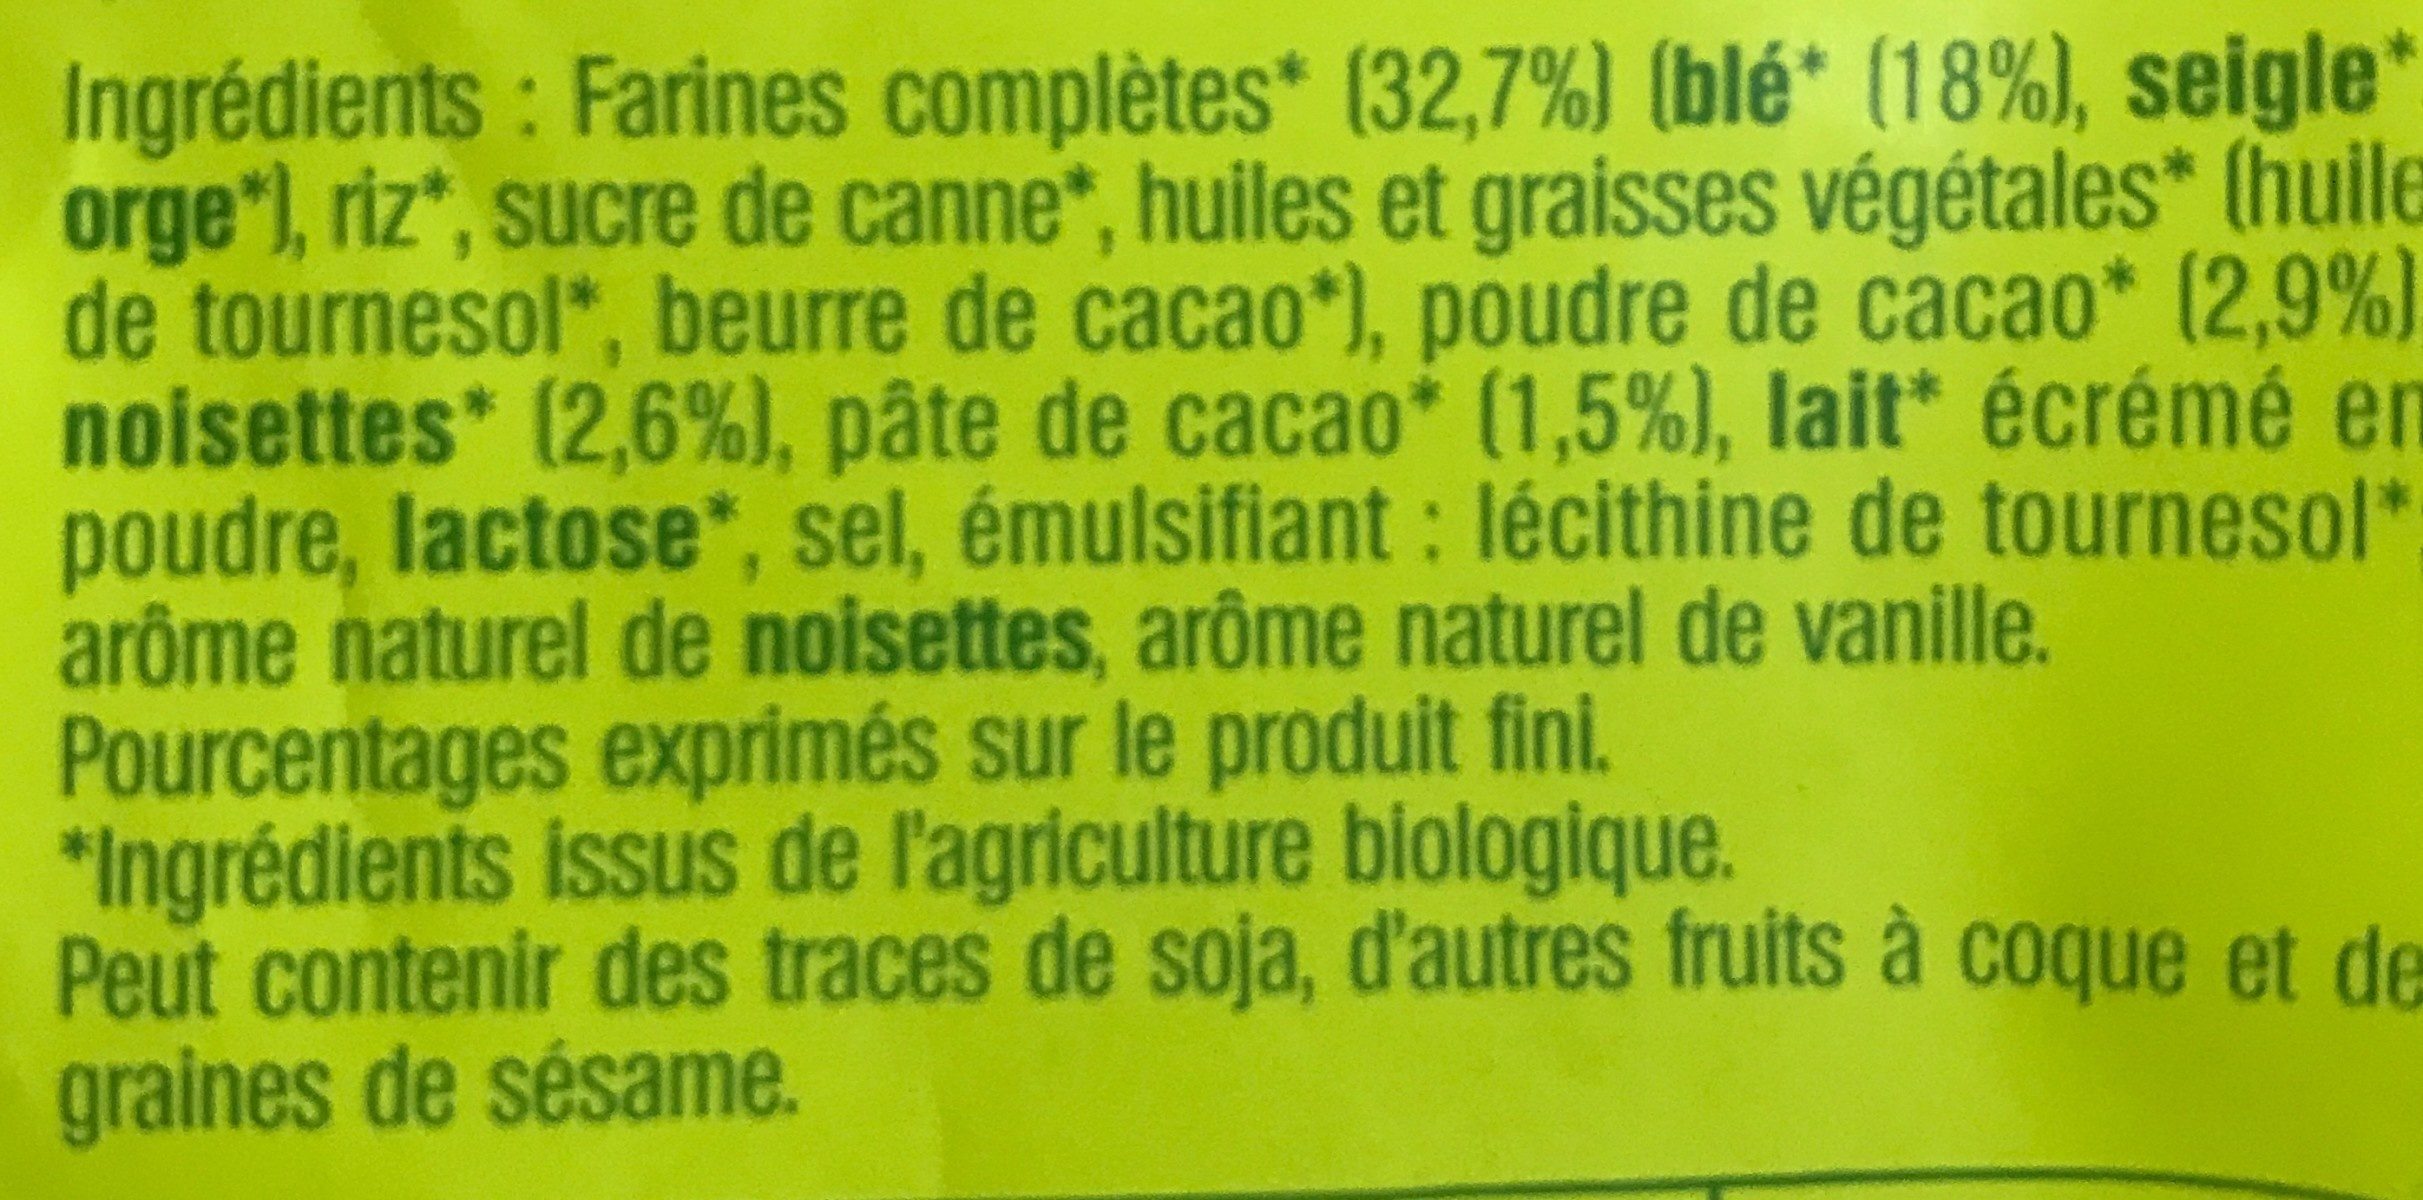 Fourrés cacao - Ingredienser - fr